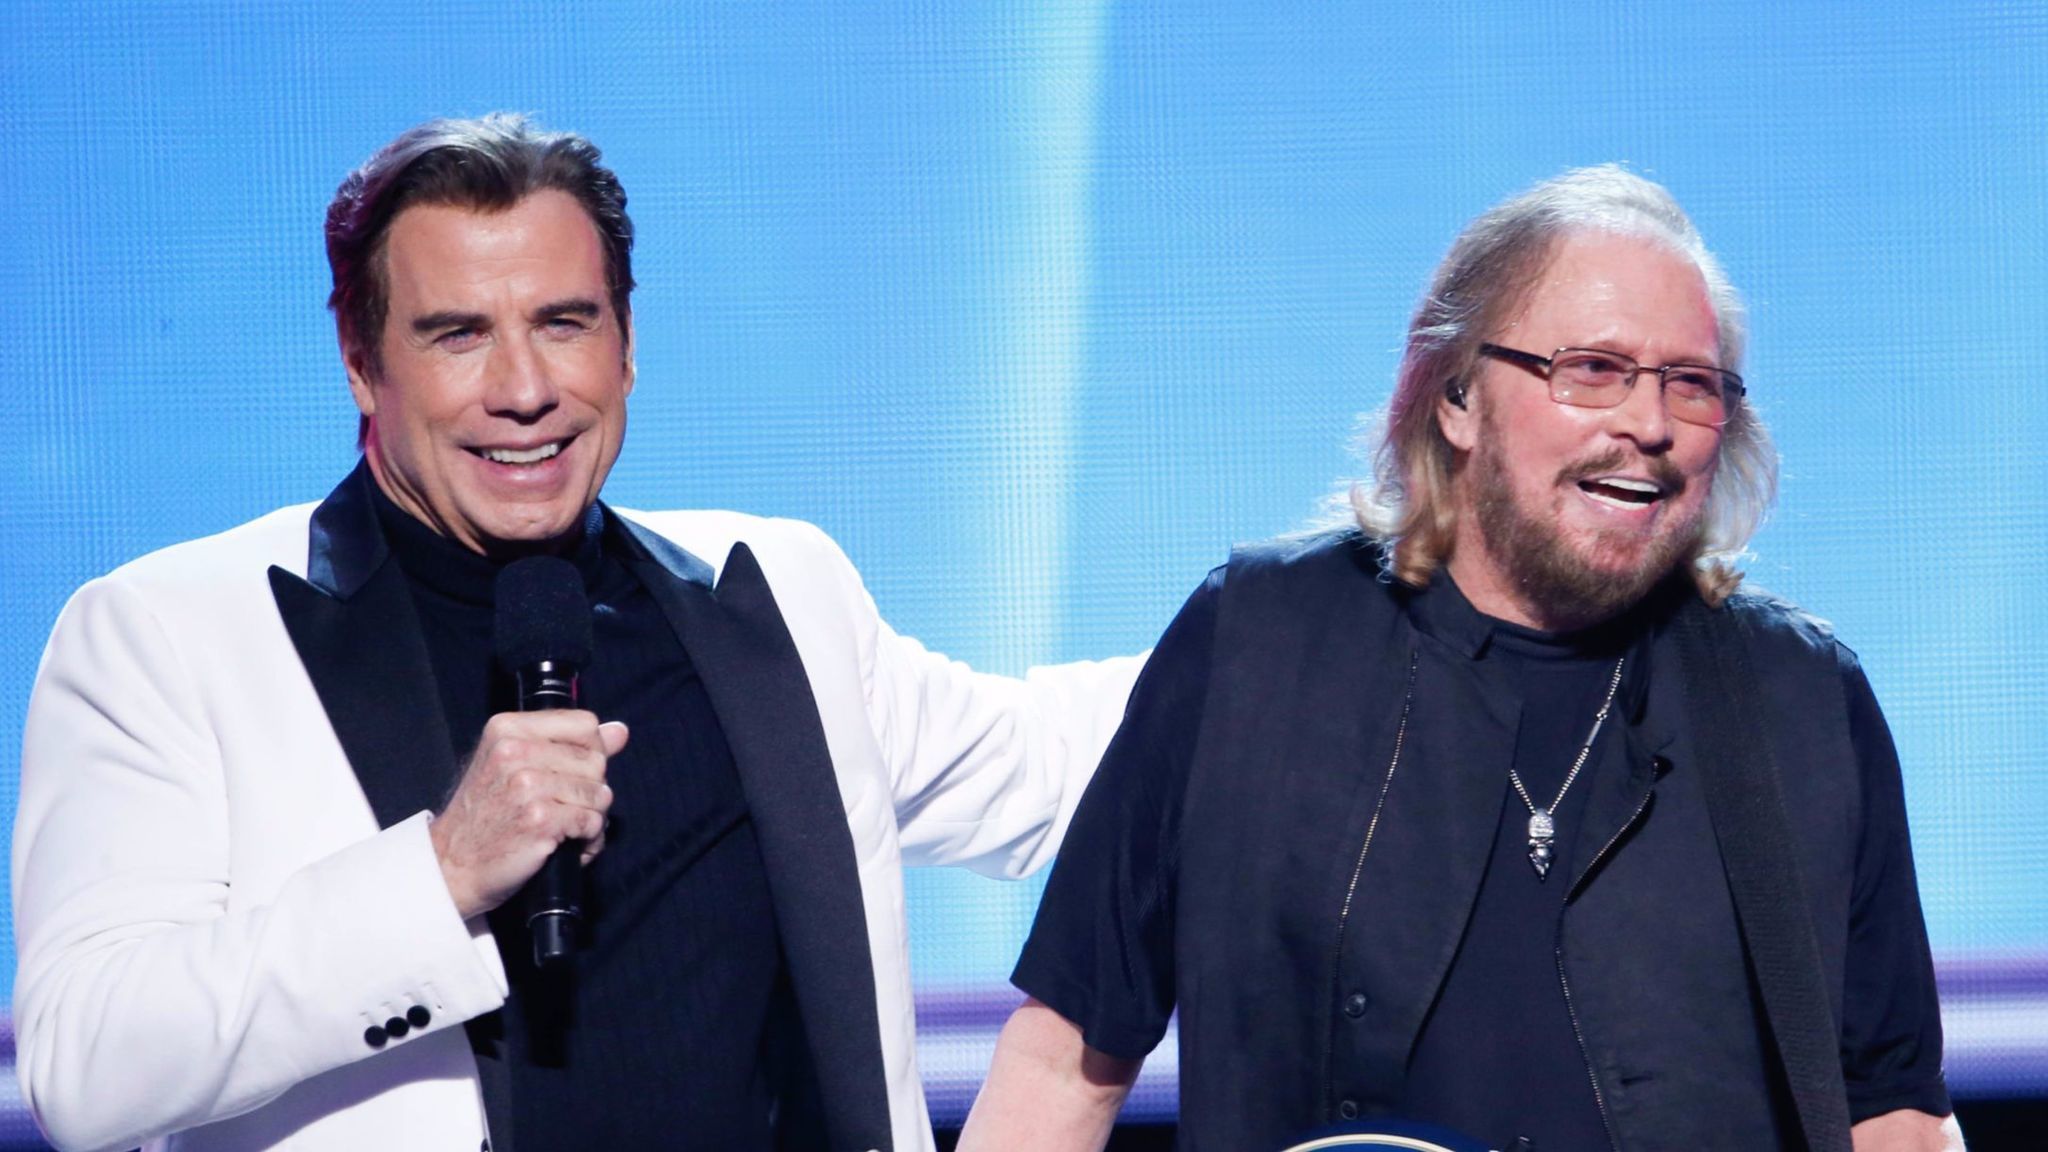 Bee Gees tribute: Dion, Wonder, Sheeran take part - Orlando Sentinel